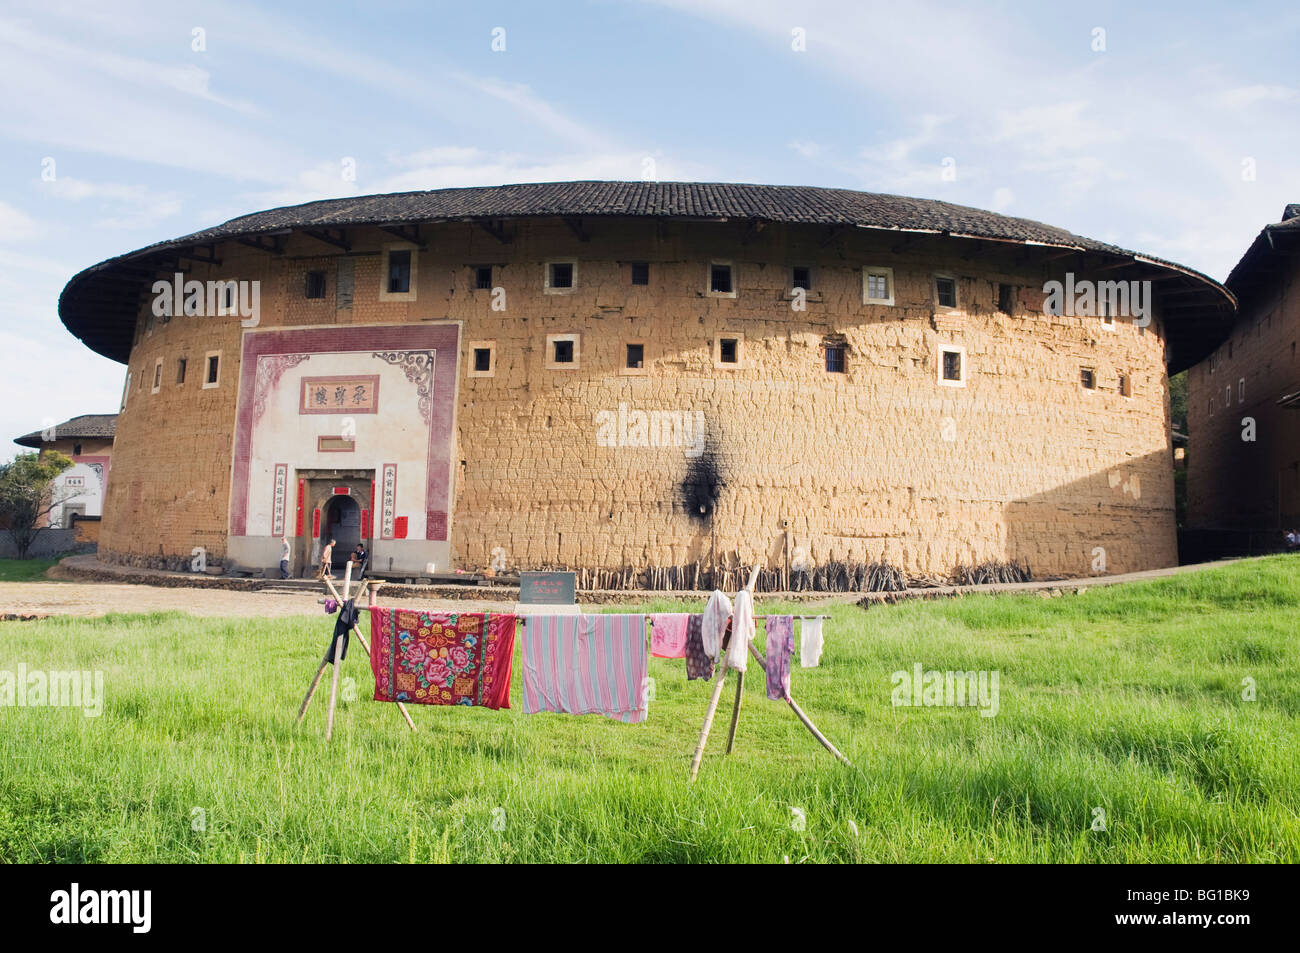 Hakka Tulou round earth buildings, UNESCO World Heritage Site, Fujian Province, China, Asia Stock Photo